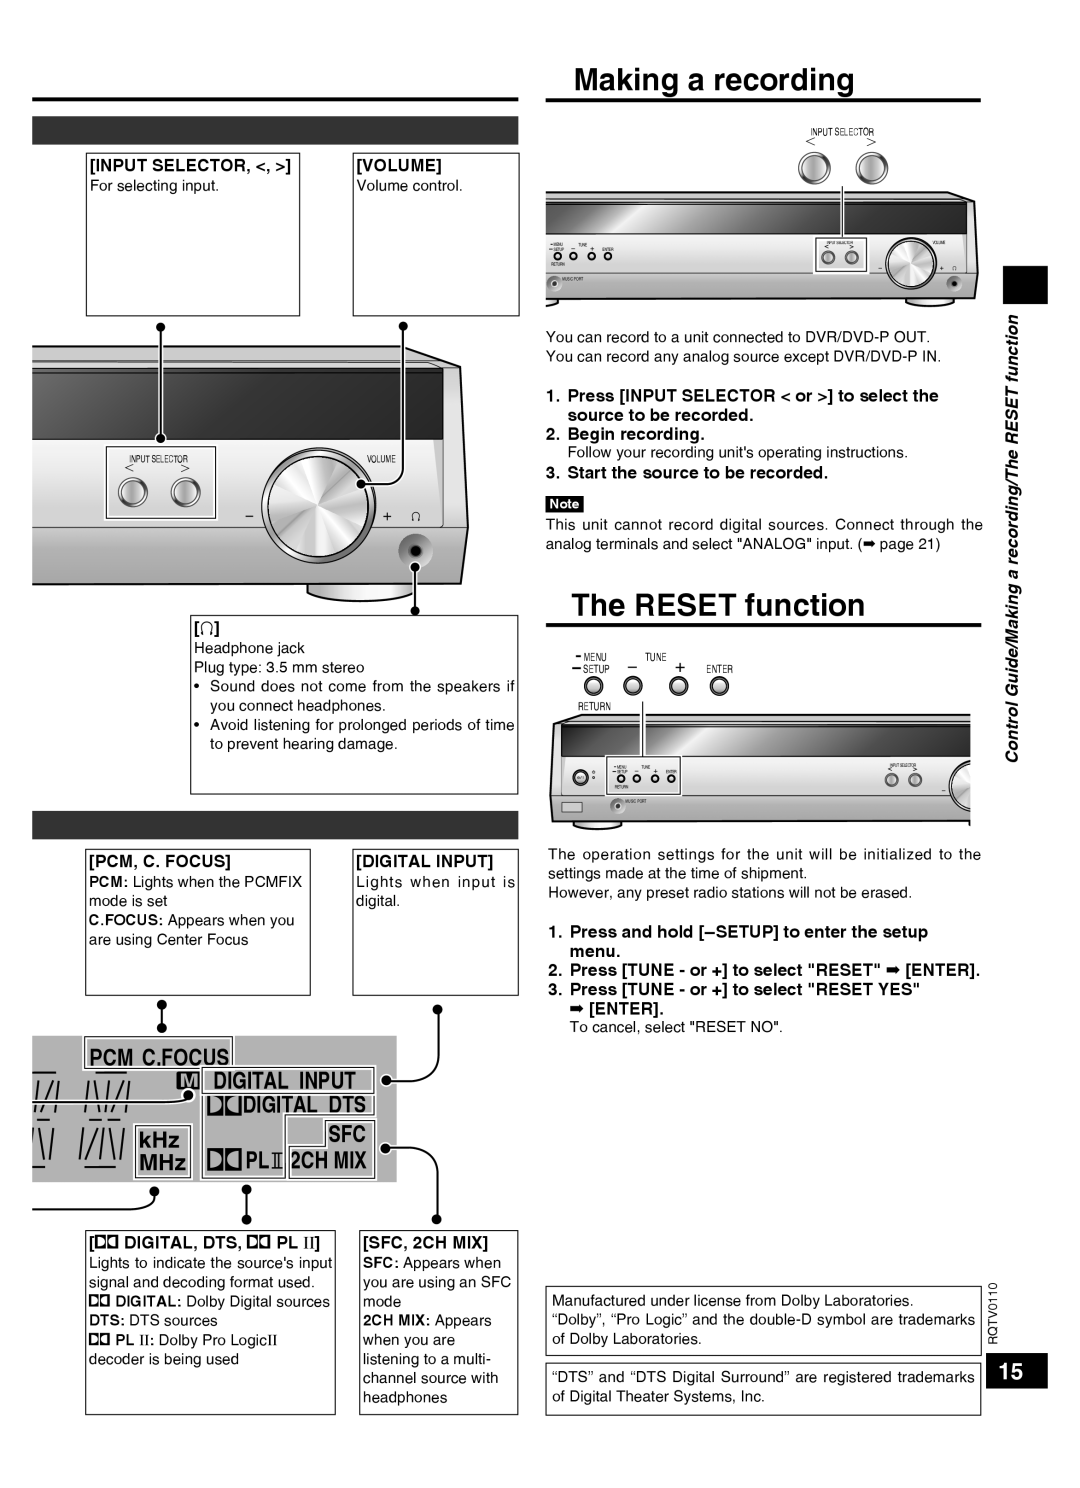 Panasonic SC-HT60 Making a recording, The RESET function, Pcm C.Focus M Digital Input Digital Dts, PL 2CH MIX, Reset 